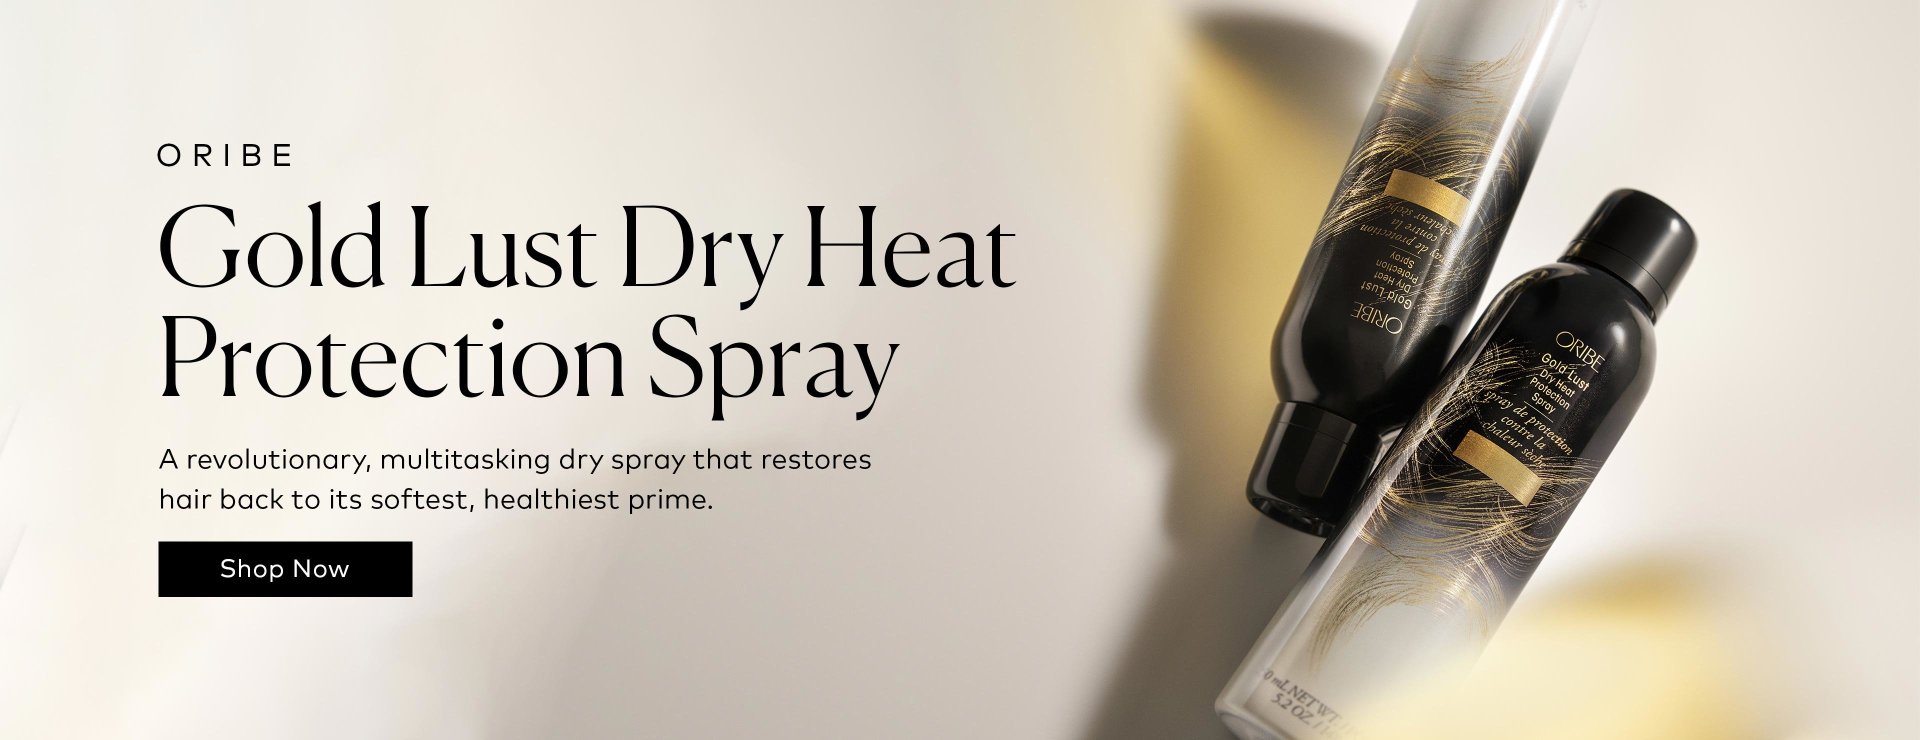 Shop the Oribe Gold Lust Dry Heat Protection Spray on Beautylish.com! 